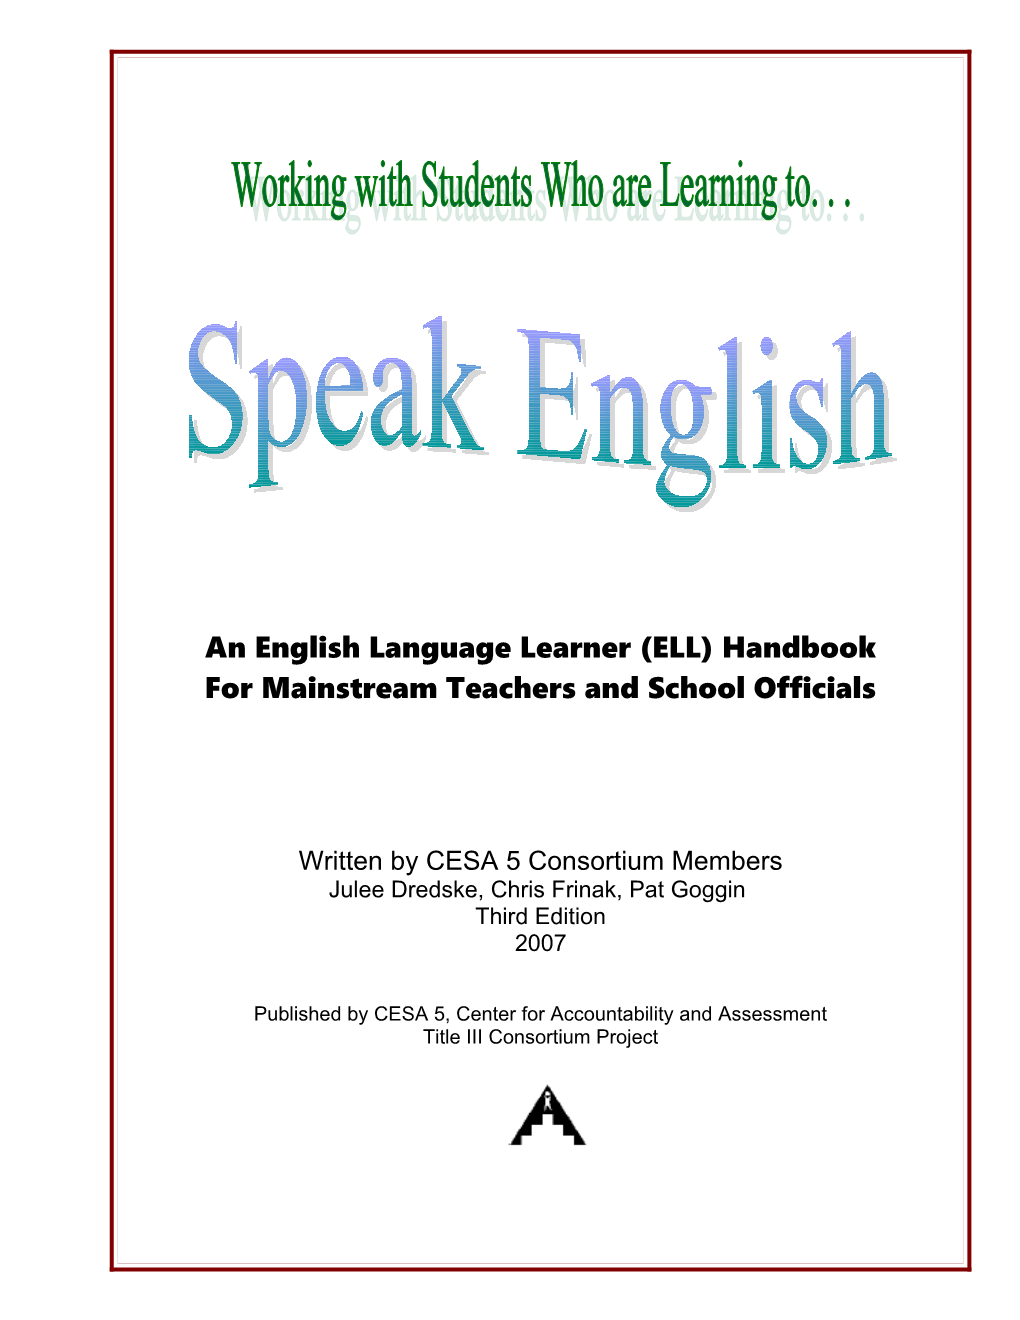 Anenglish Language Learner (ELL) Handbook